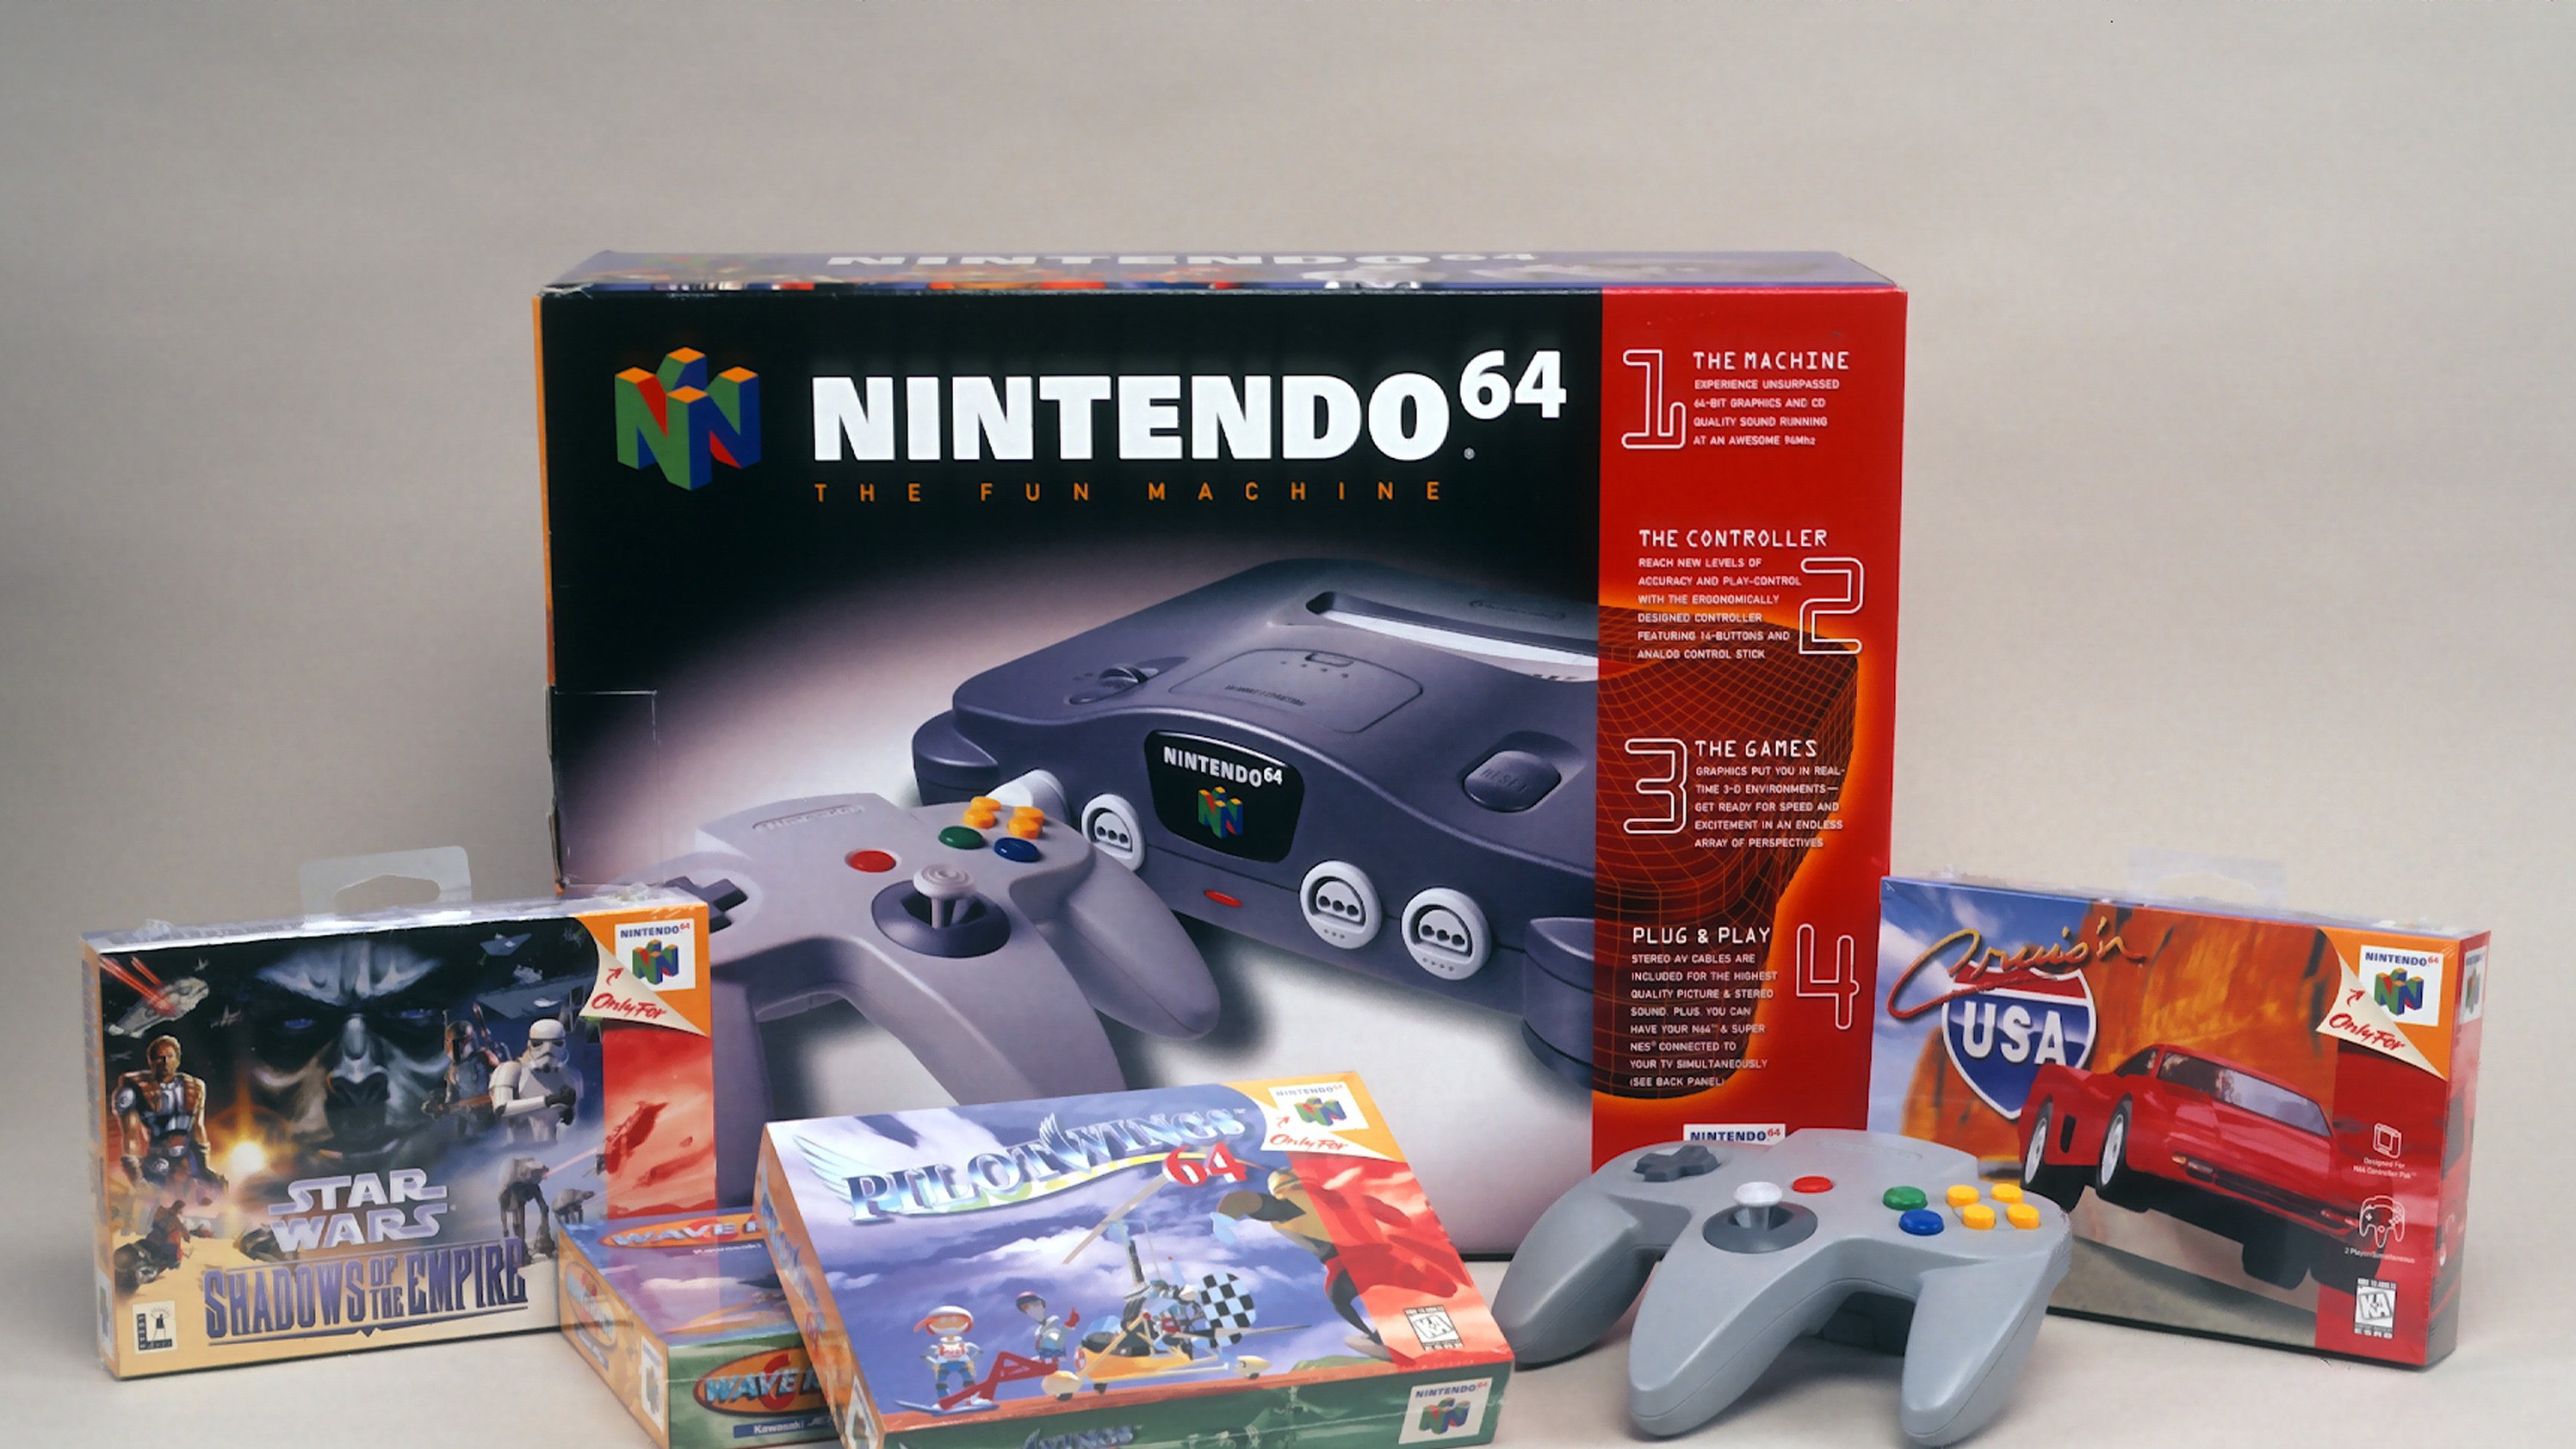 Nintendo 64 (N64): "The Fun Machine" Could Make Classic ...